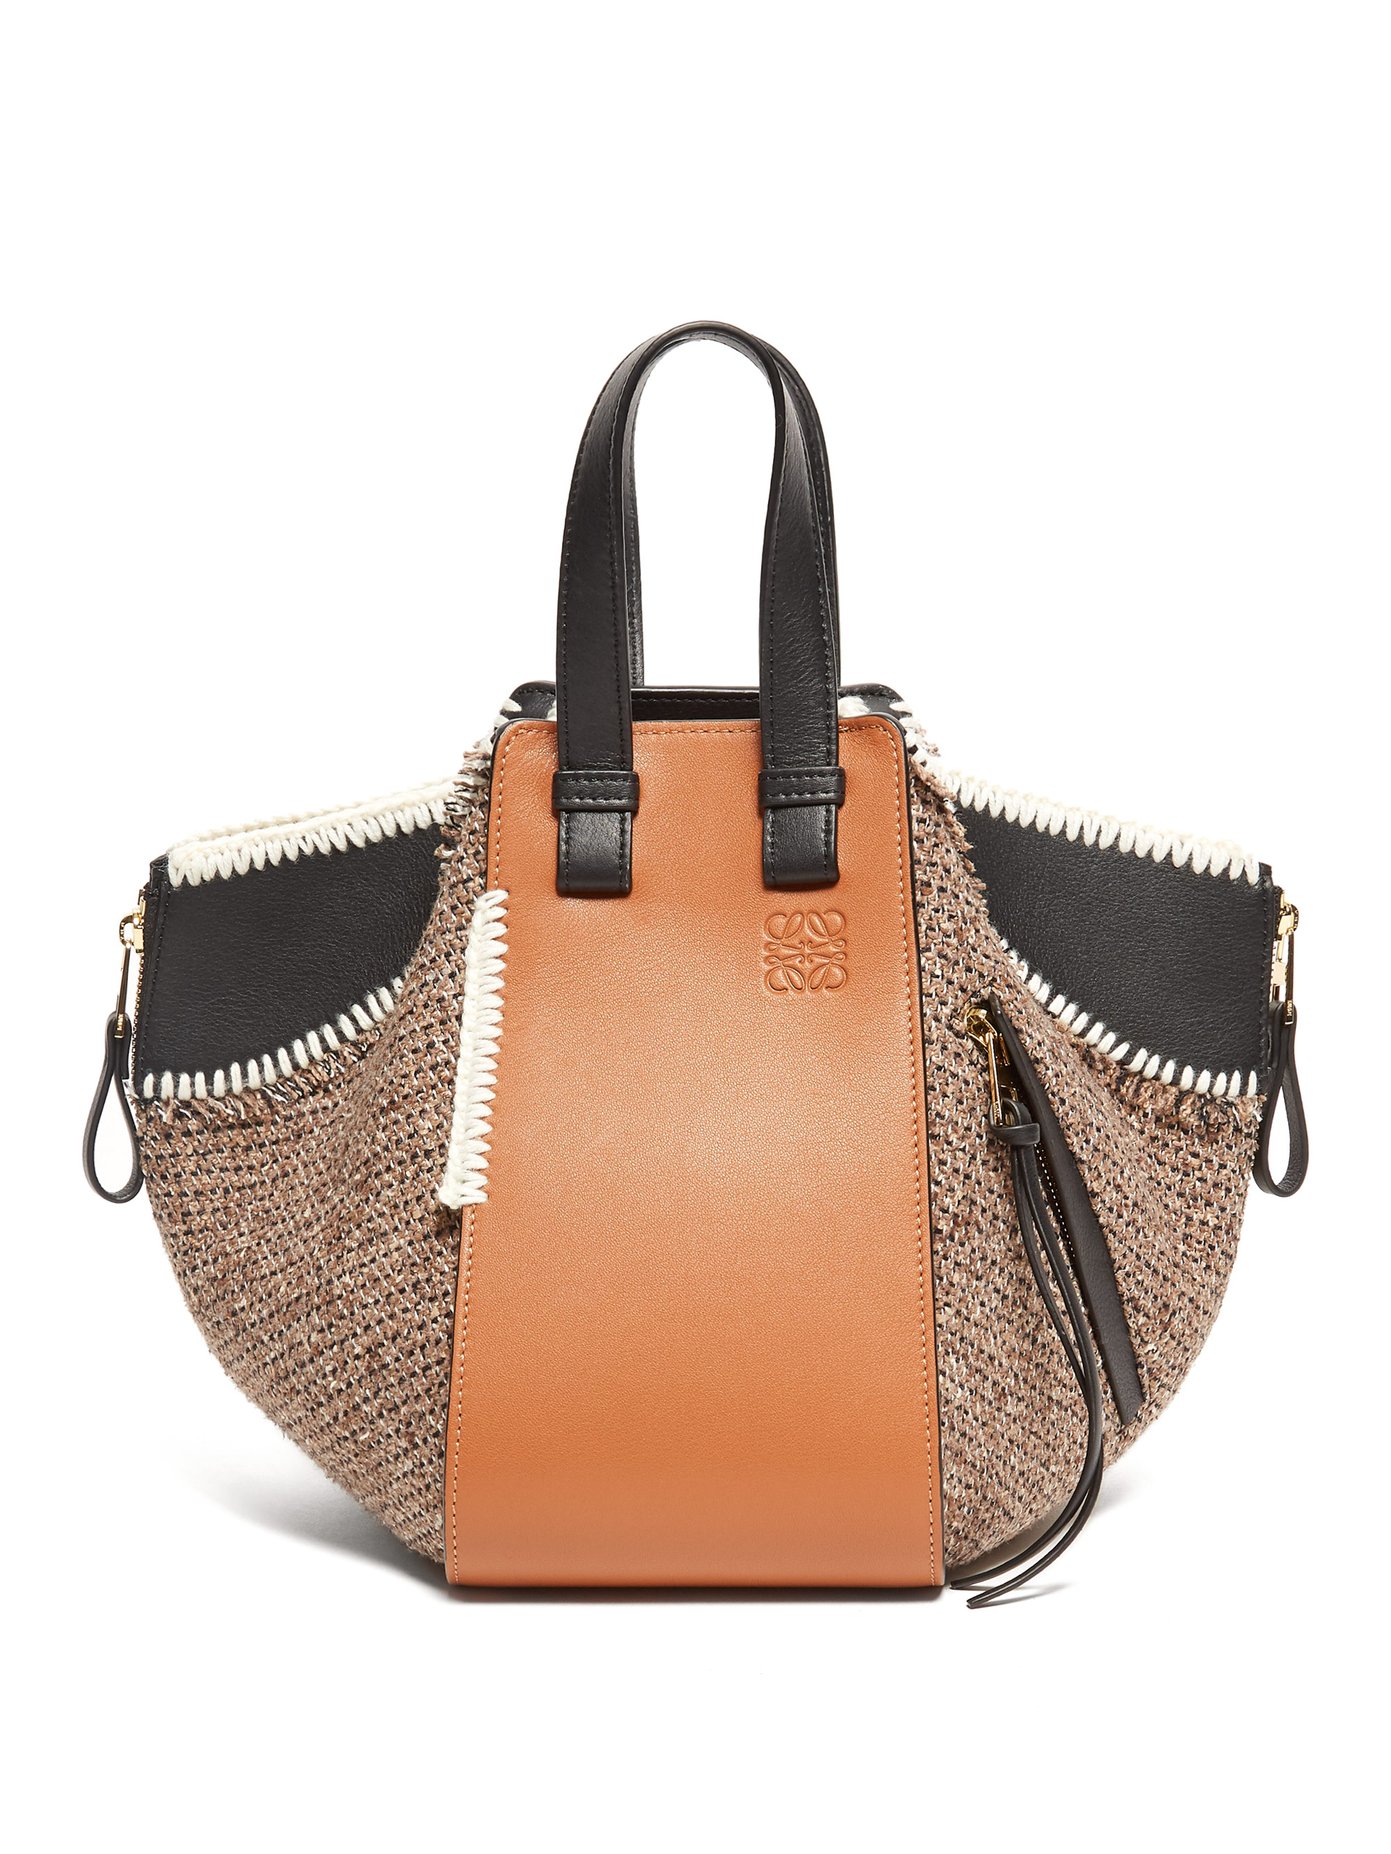 Hammock small leather tote bag | Loewe 